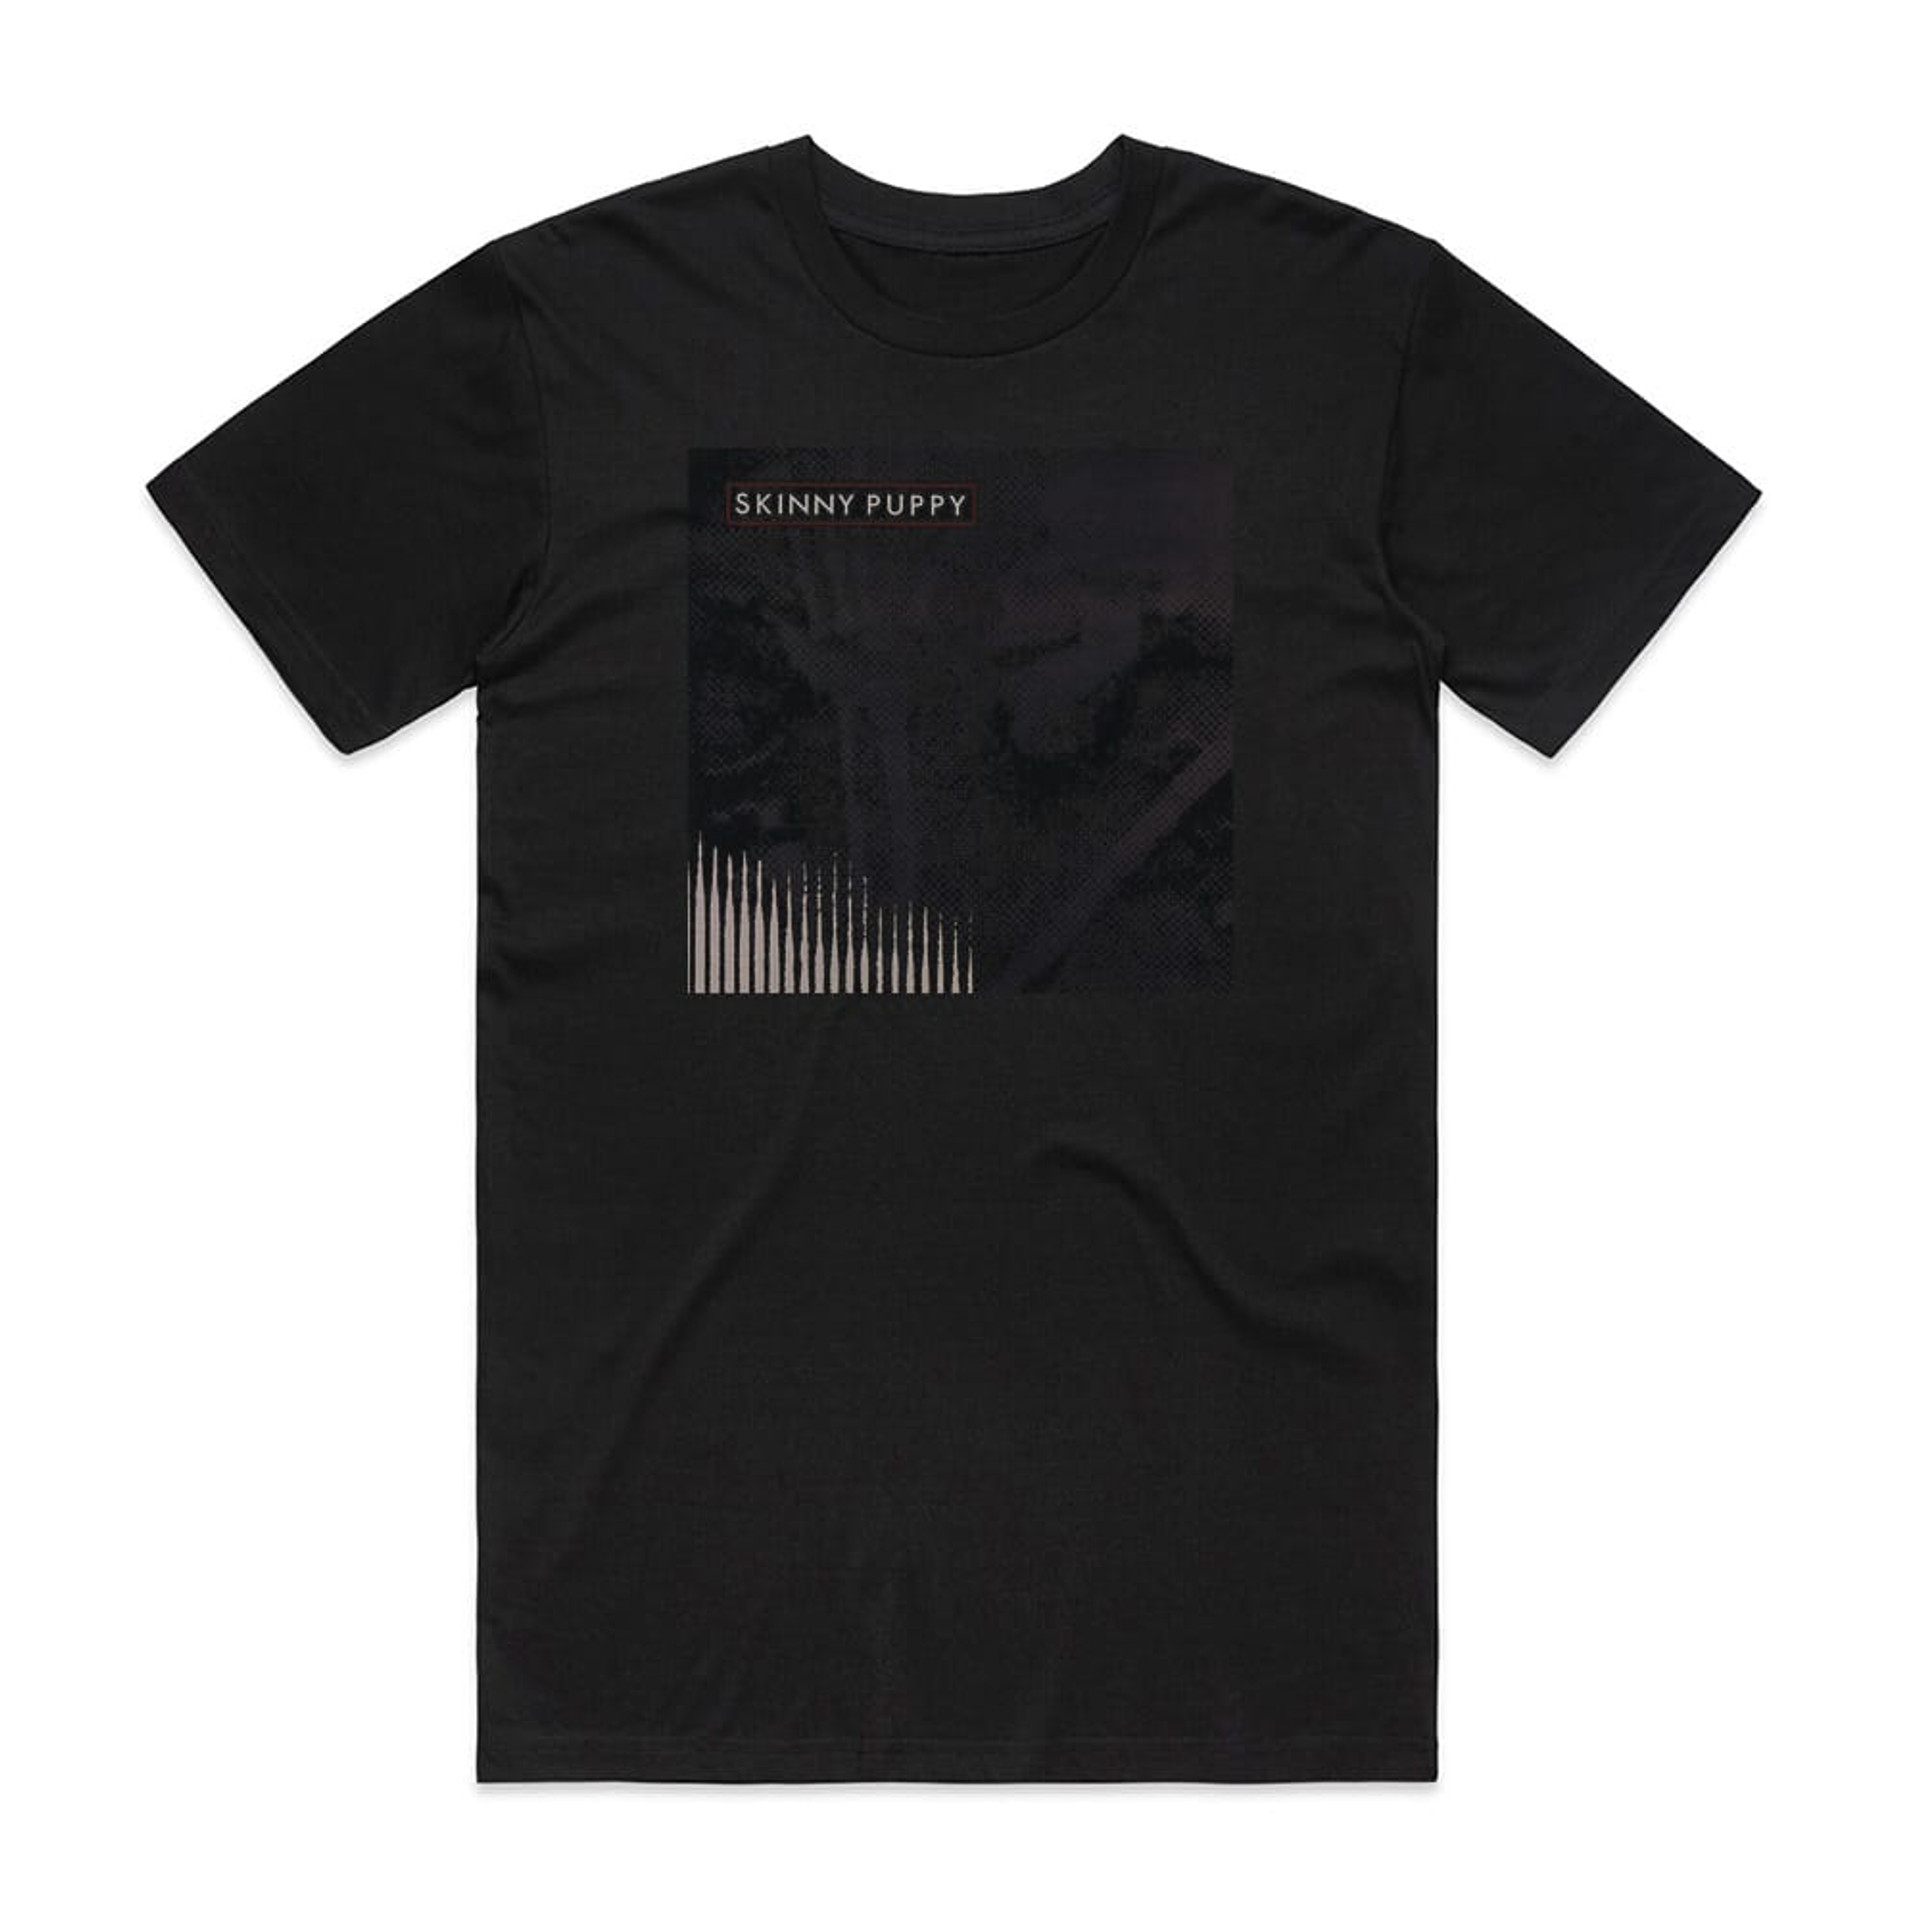 Skinny Puppy Remission Album Cover T-Shirt Black